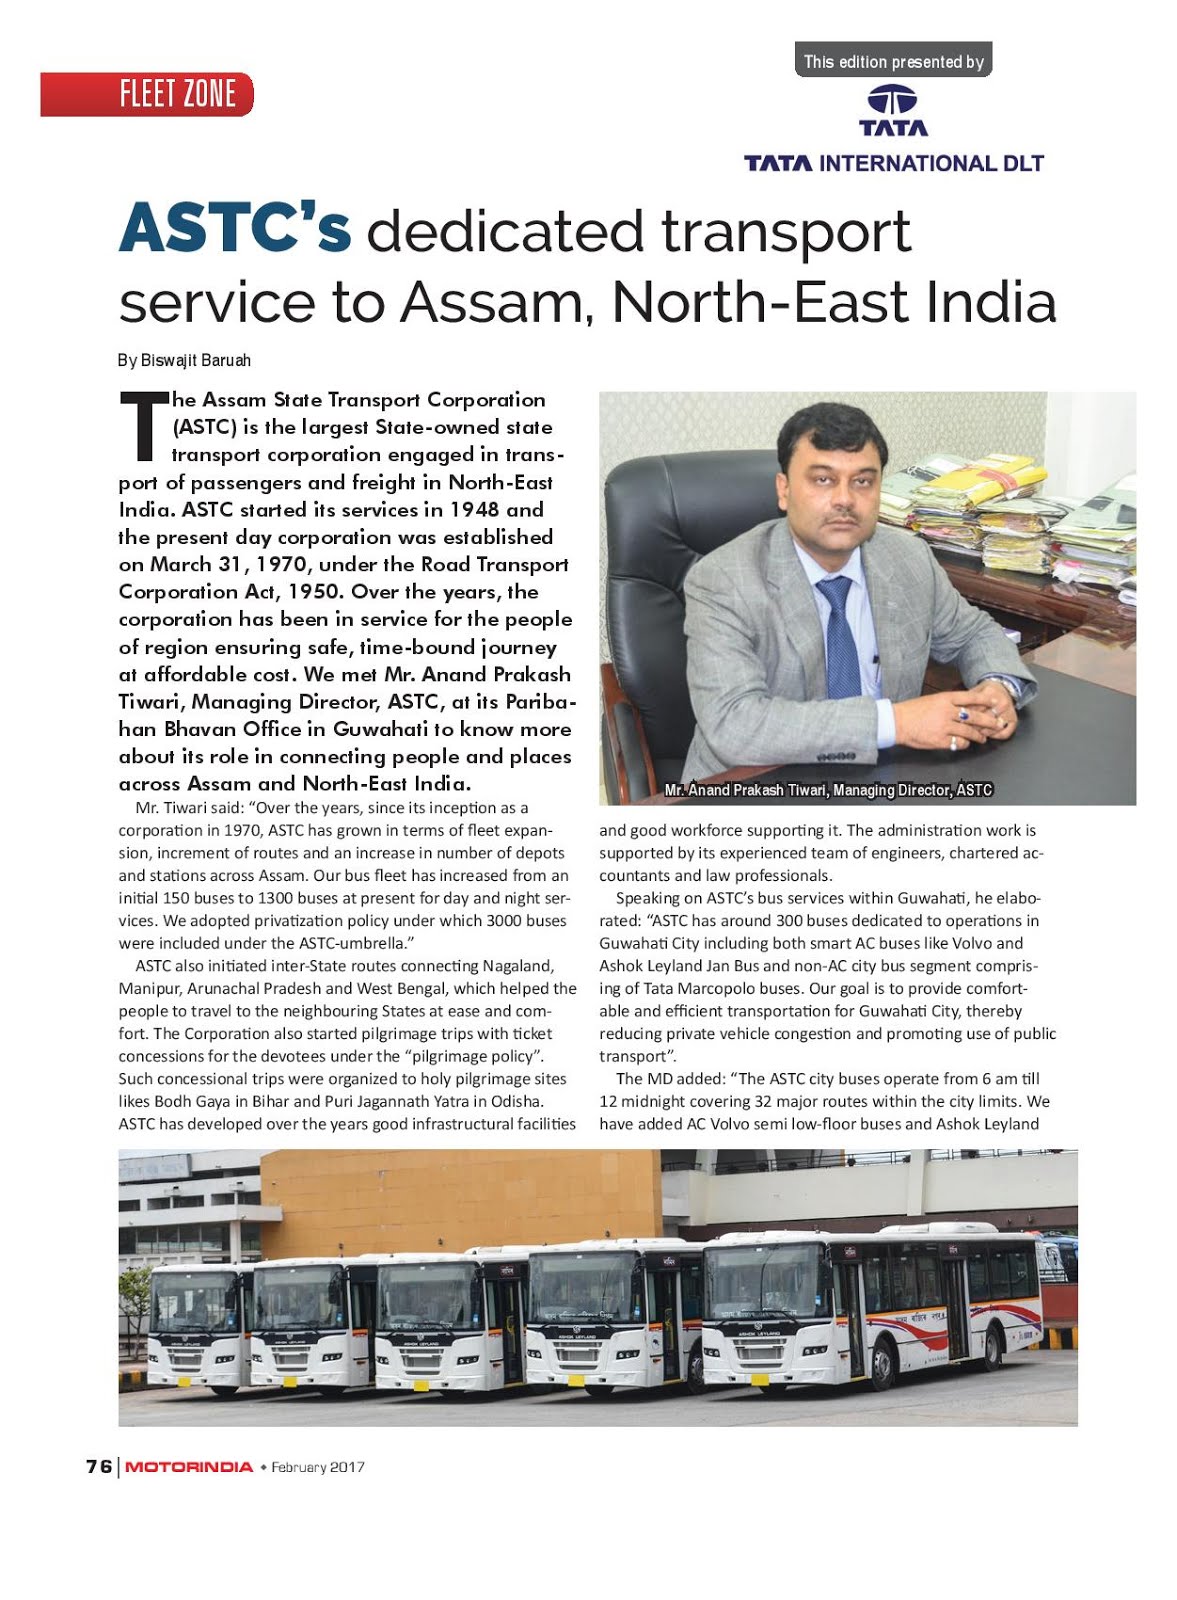 MOTOR INDIA ARTICLE 10 : ASSAM STATE TRANSPORT CORPORATION